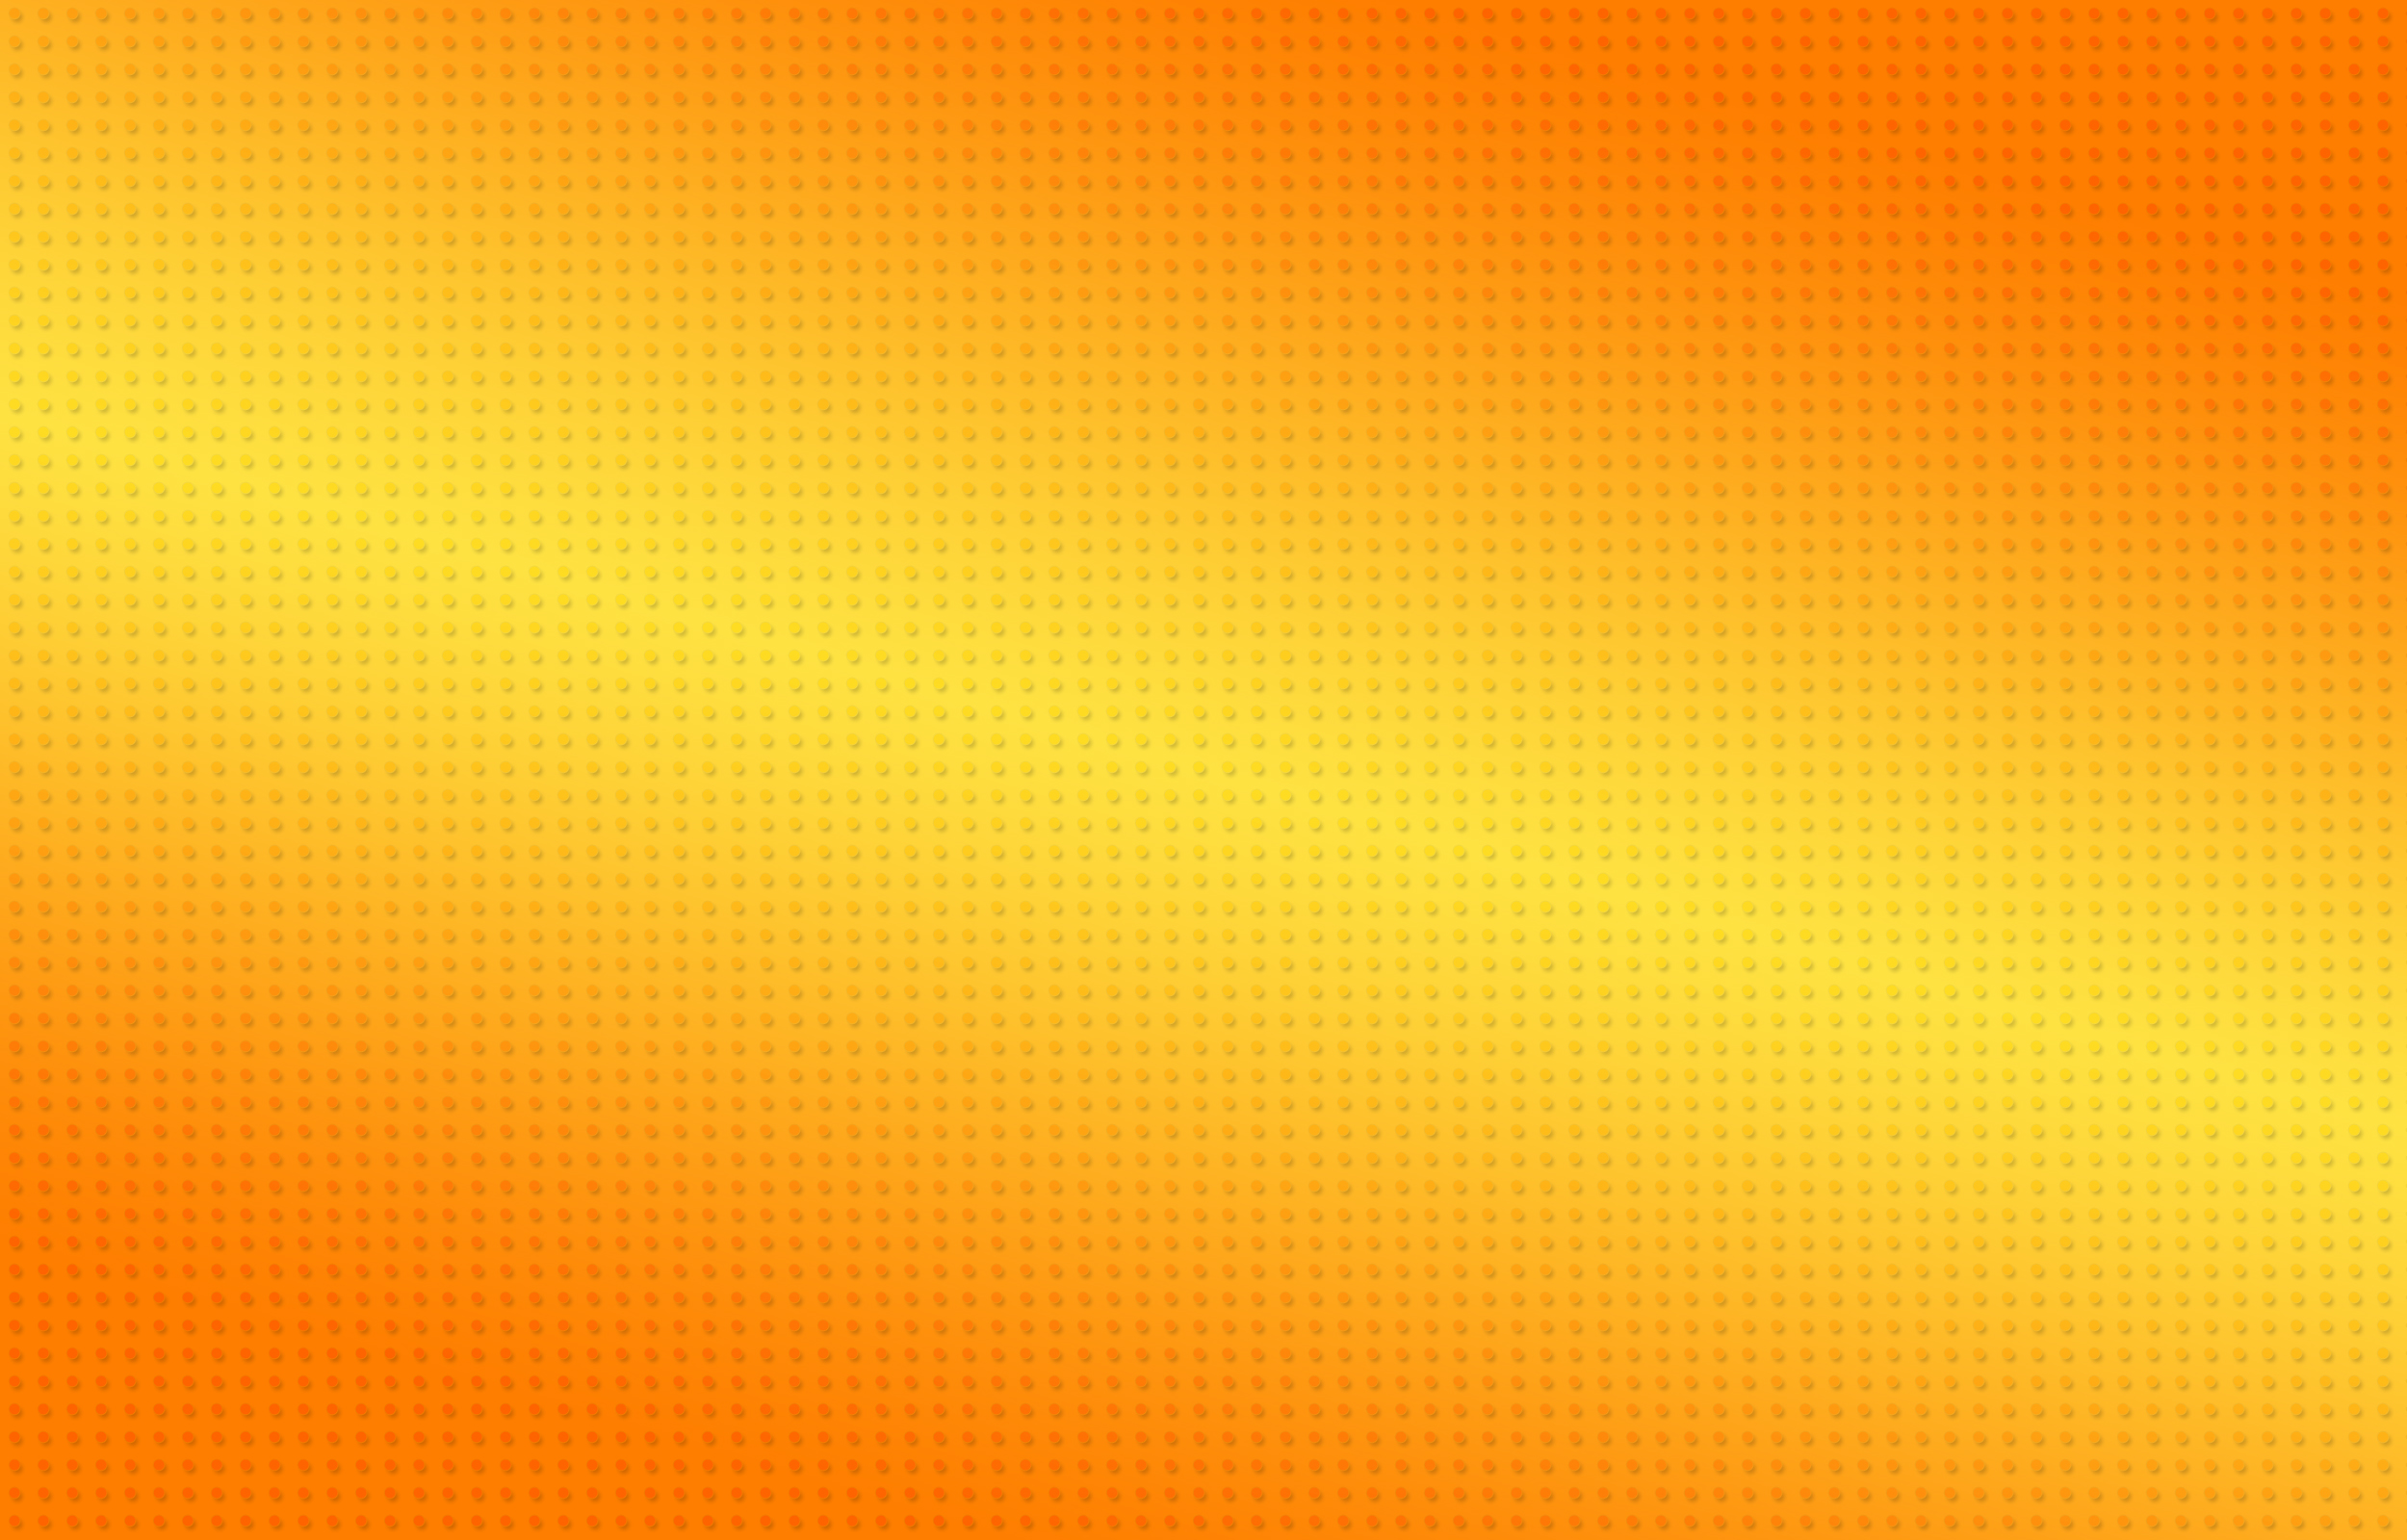 Plain Orange HD Orange Aesthetic Wallpapers  HD Wallpapers  ID 54395